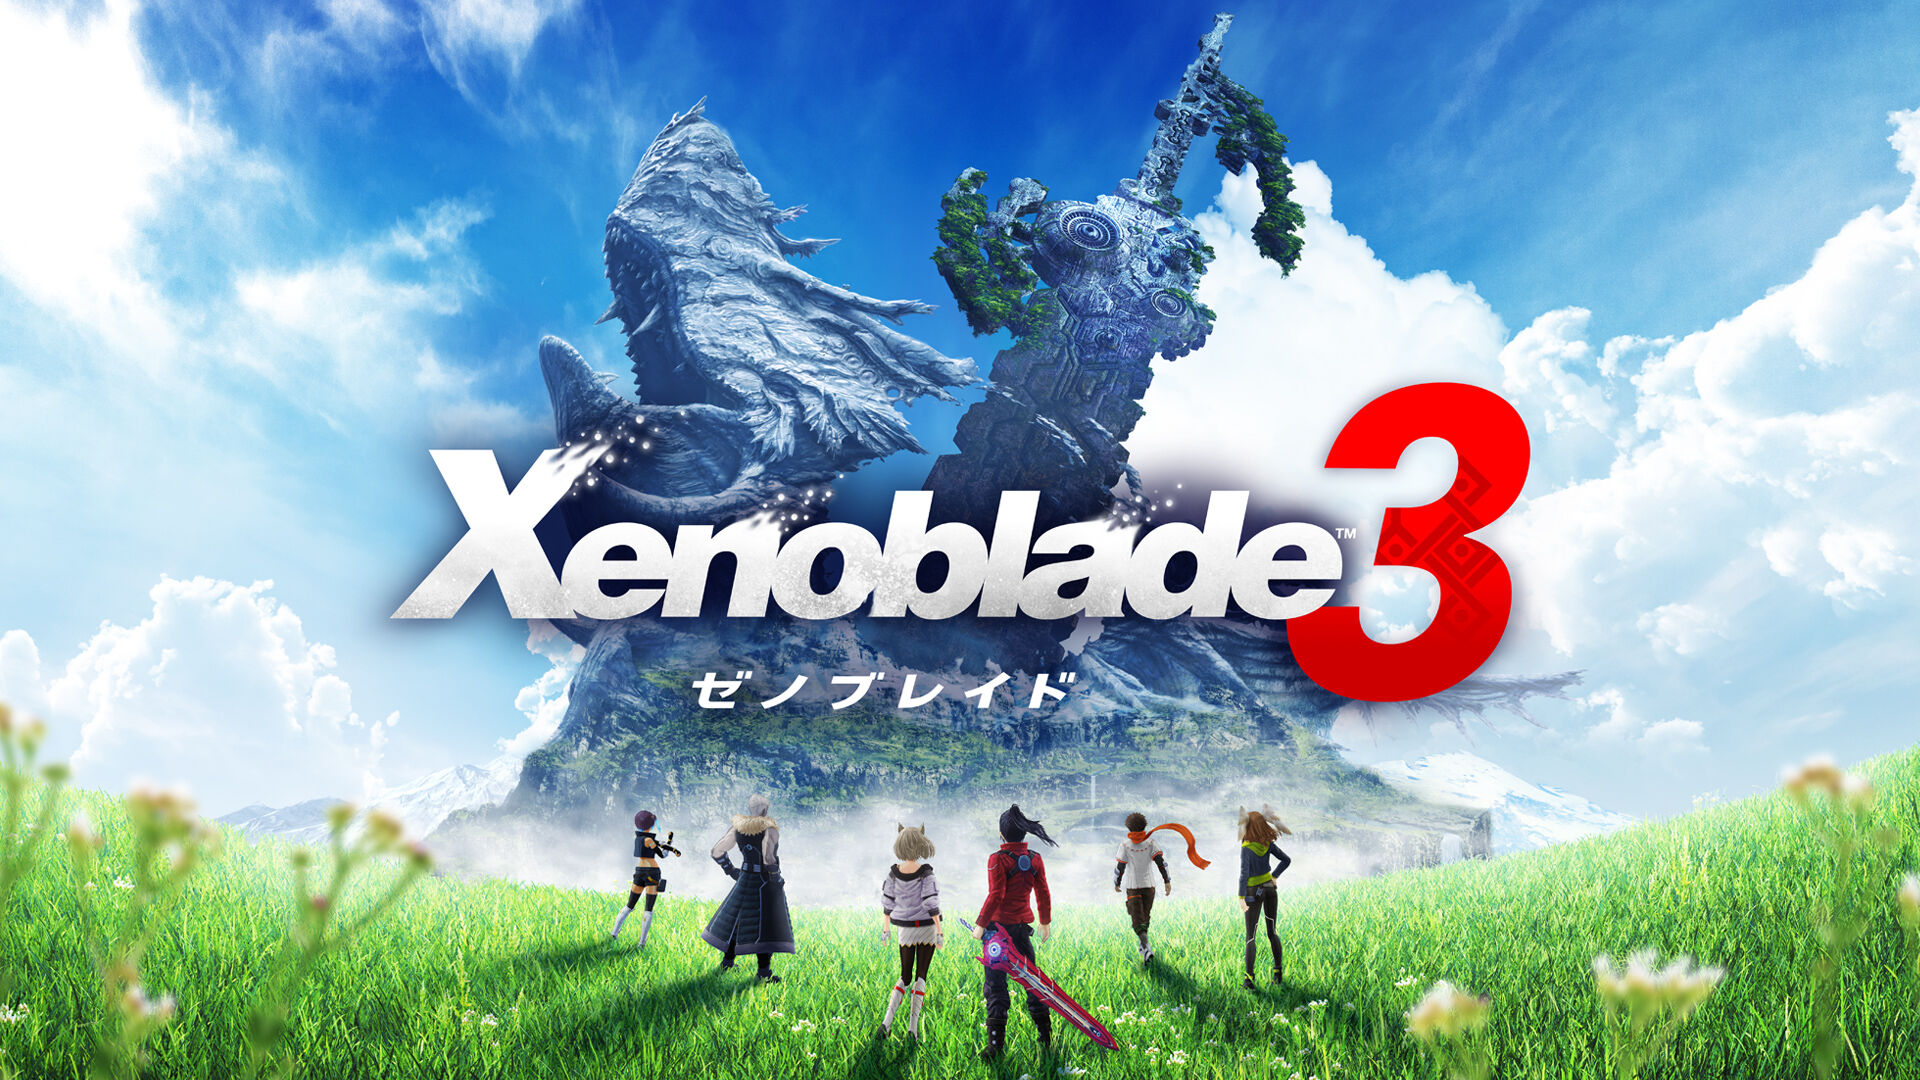 Xenoblade3 (ゼノブレイド3) ダウンロード版 | My Nintendo Store ...